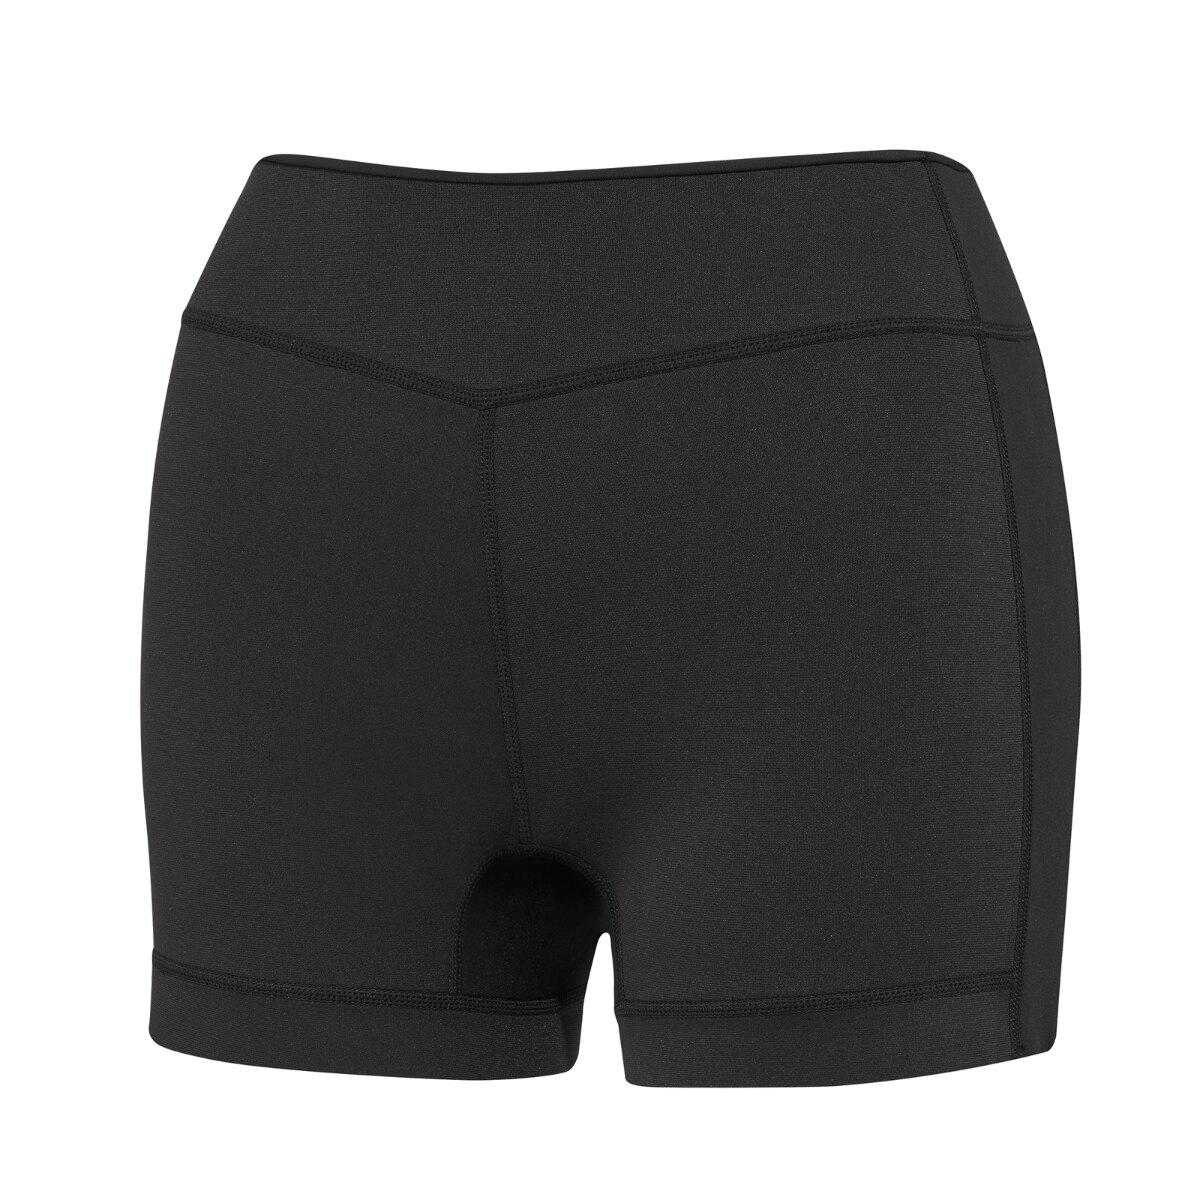 Women's 1.5mm Neoprene Shorty Shorts XS Black